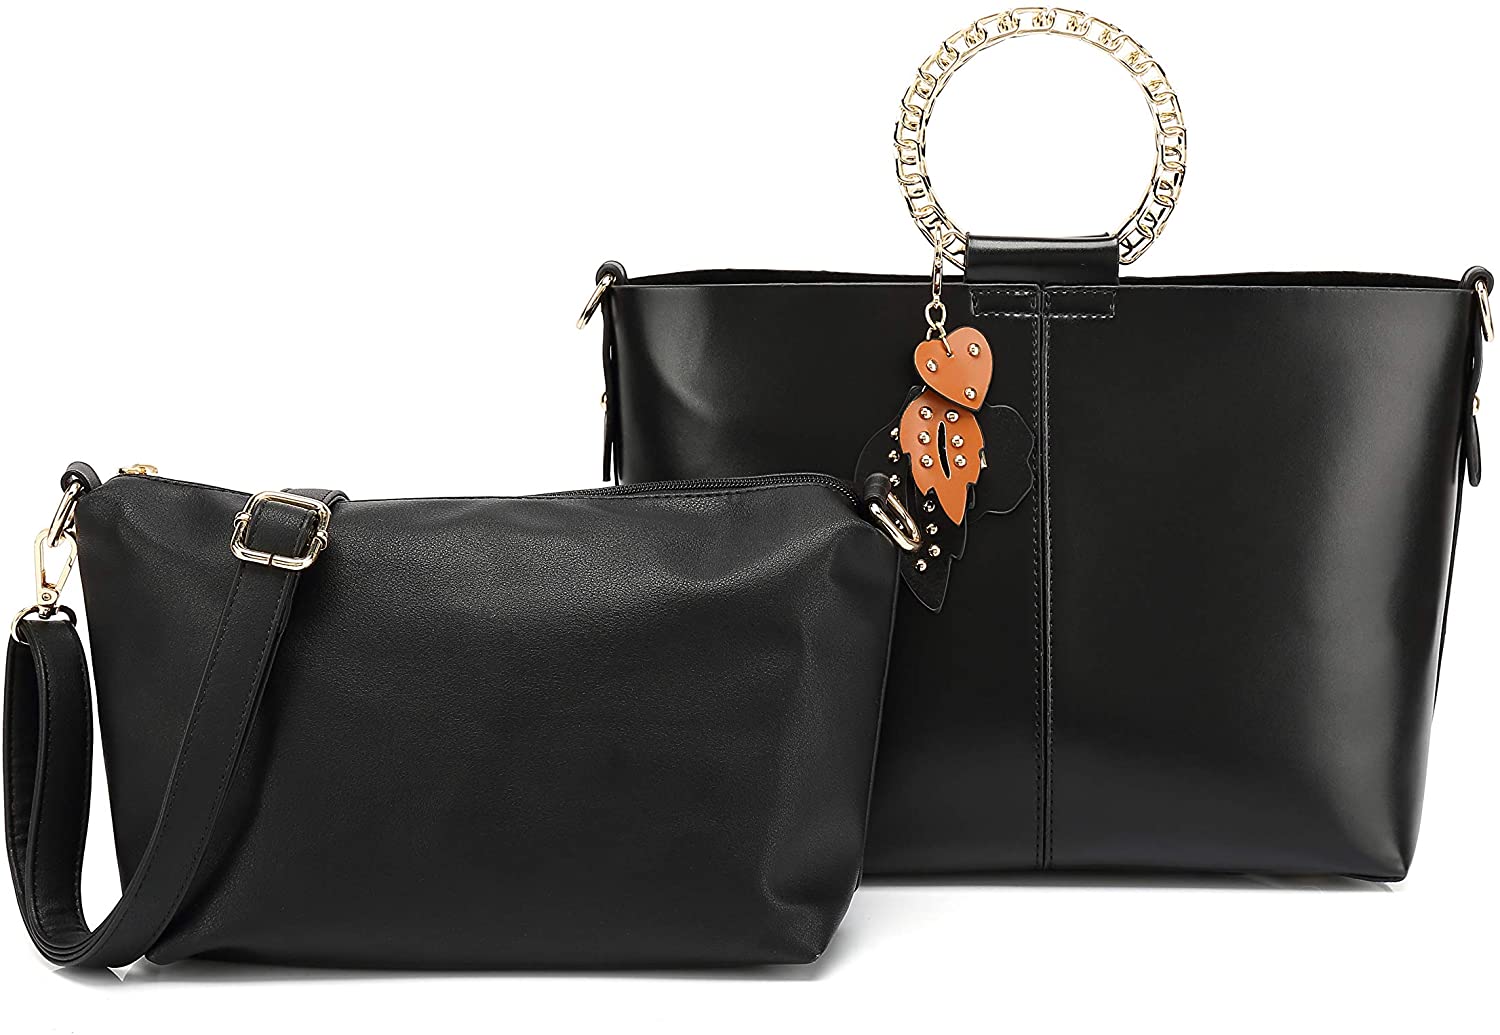 Price:$33.99    Women Handbags Set Fashion PU Top Handle Satchel Shoulder Tote Bags (Black)  Clothing